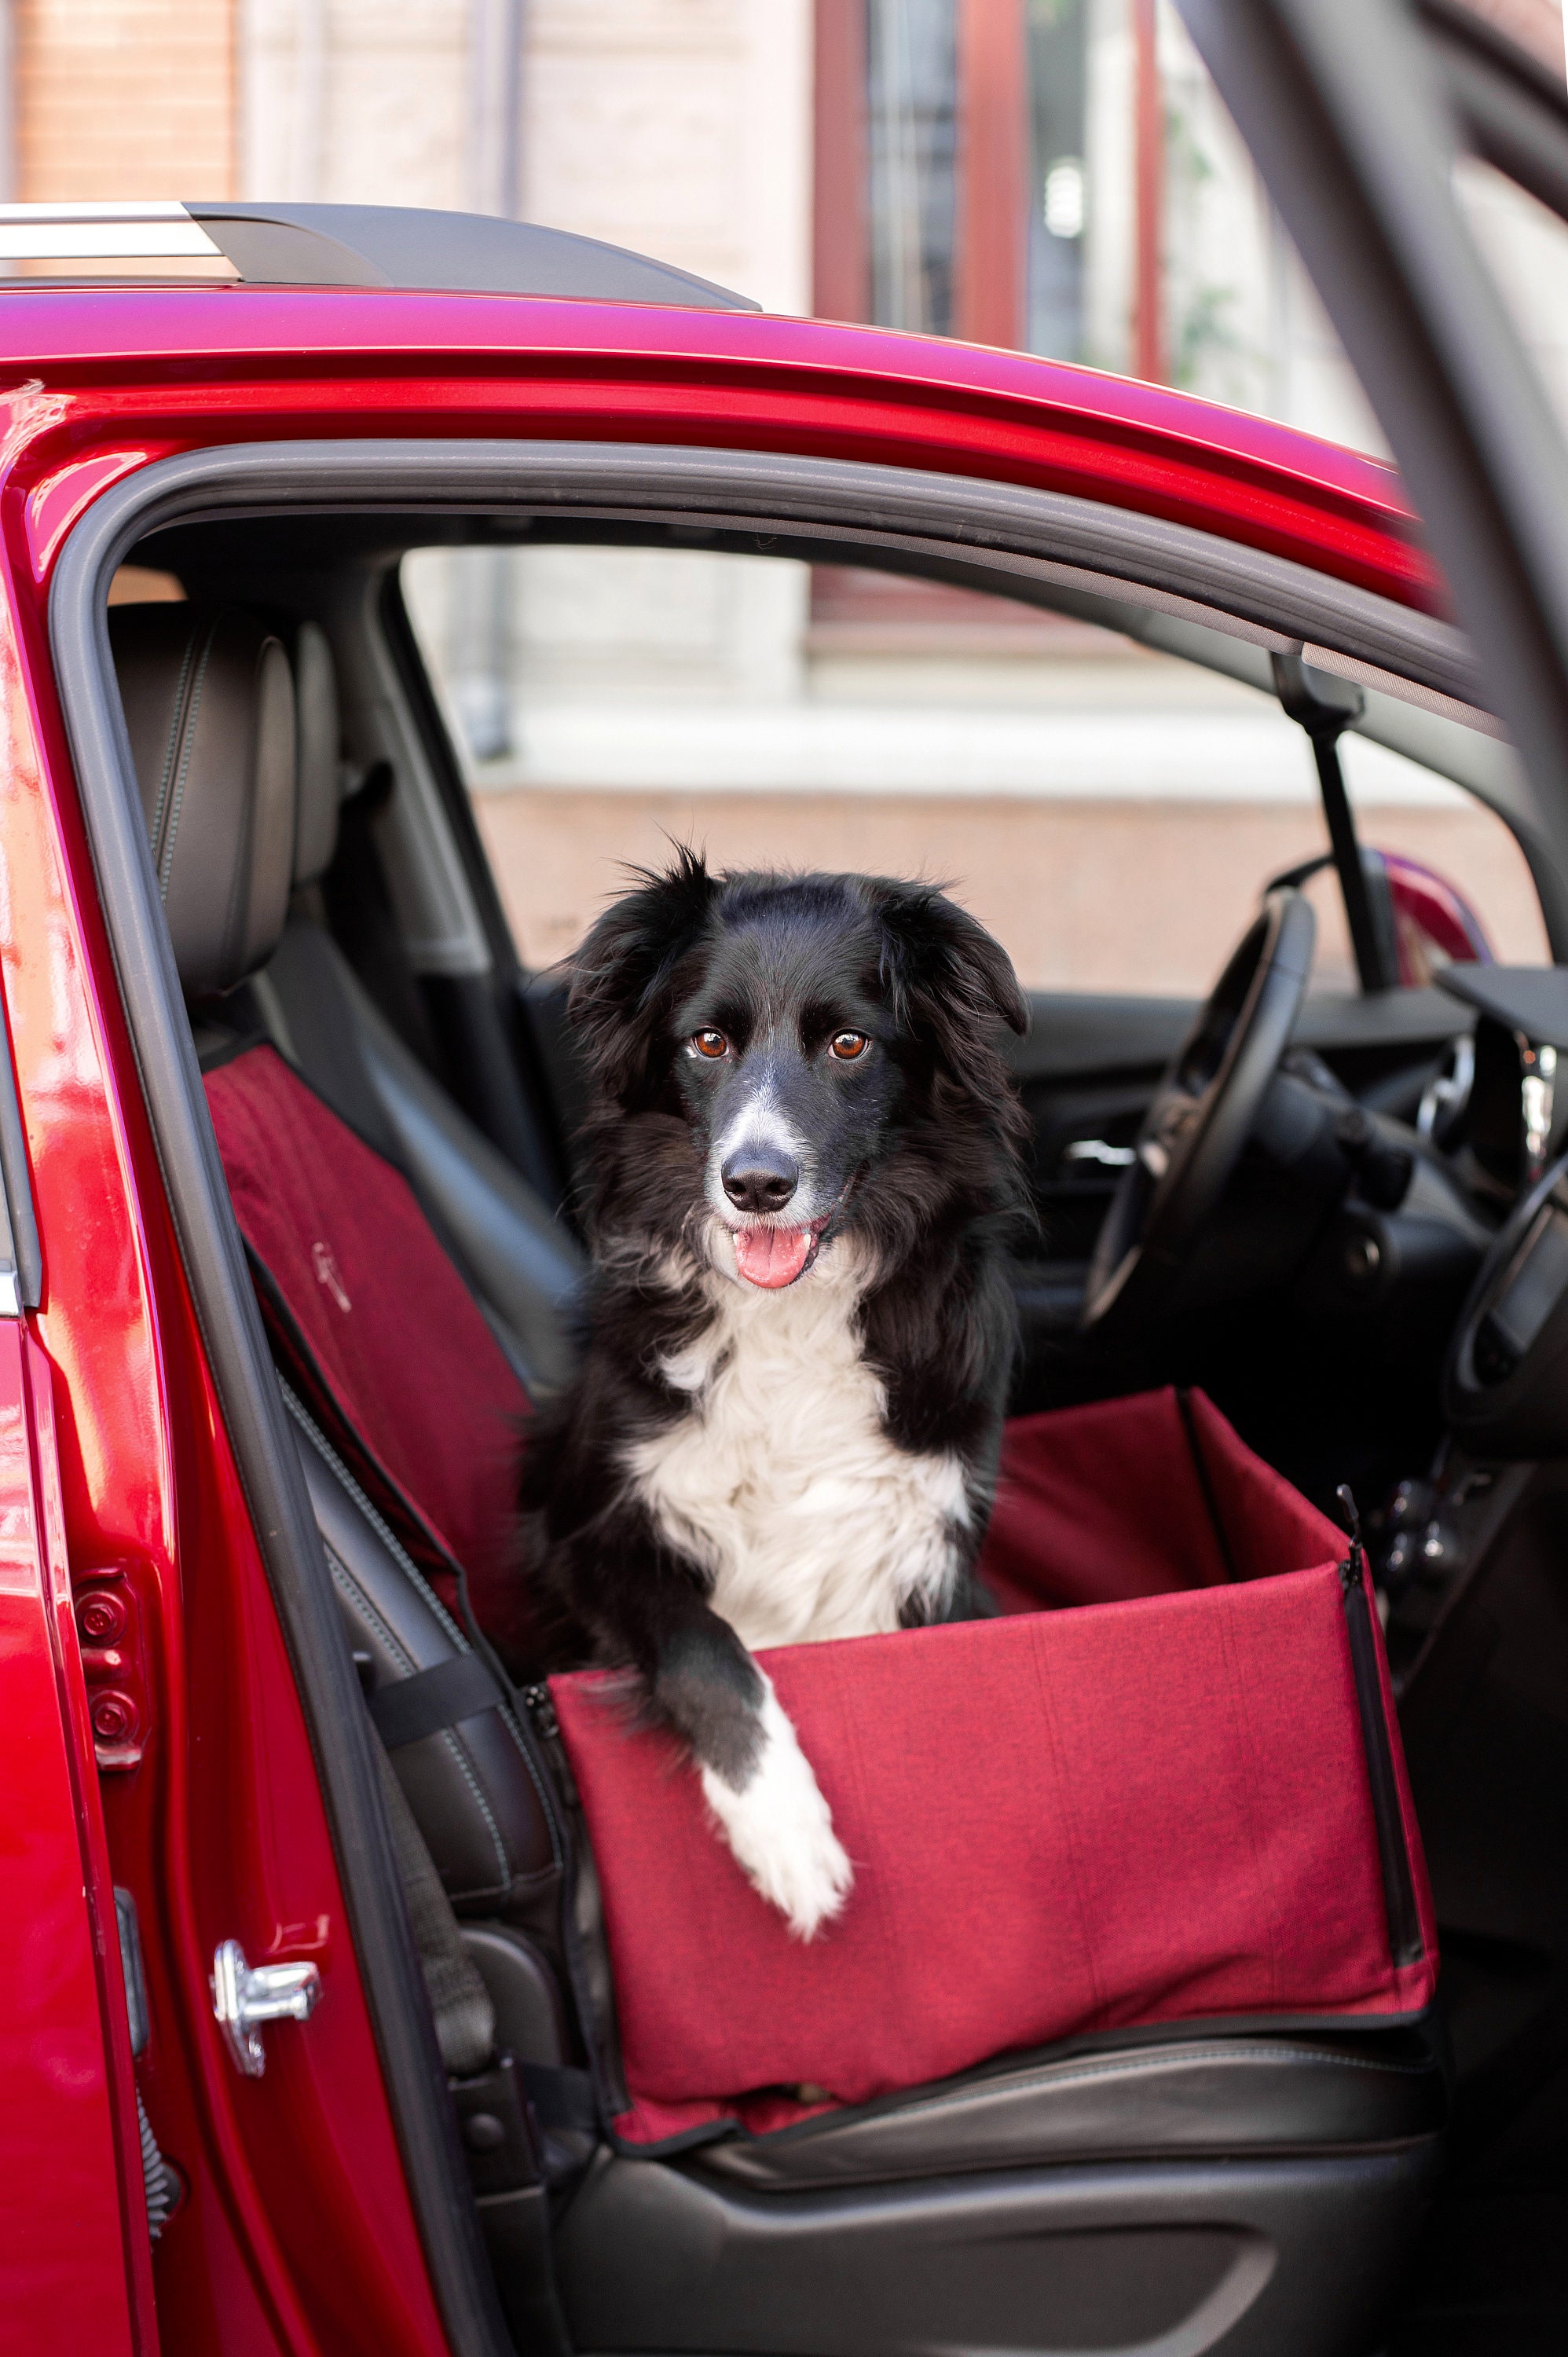 Dog Car Seat Pattern Hammocks, Dog Car Seat Cover Hammock